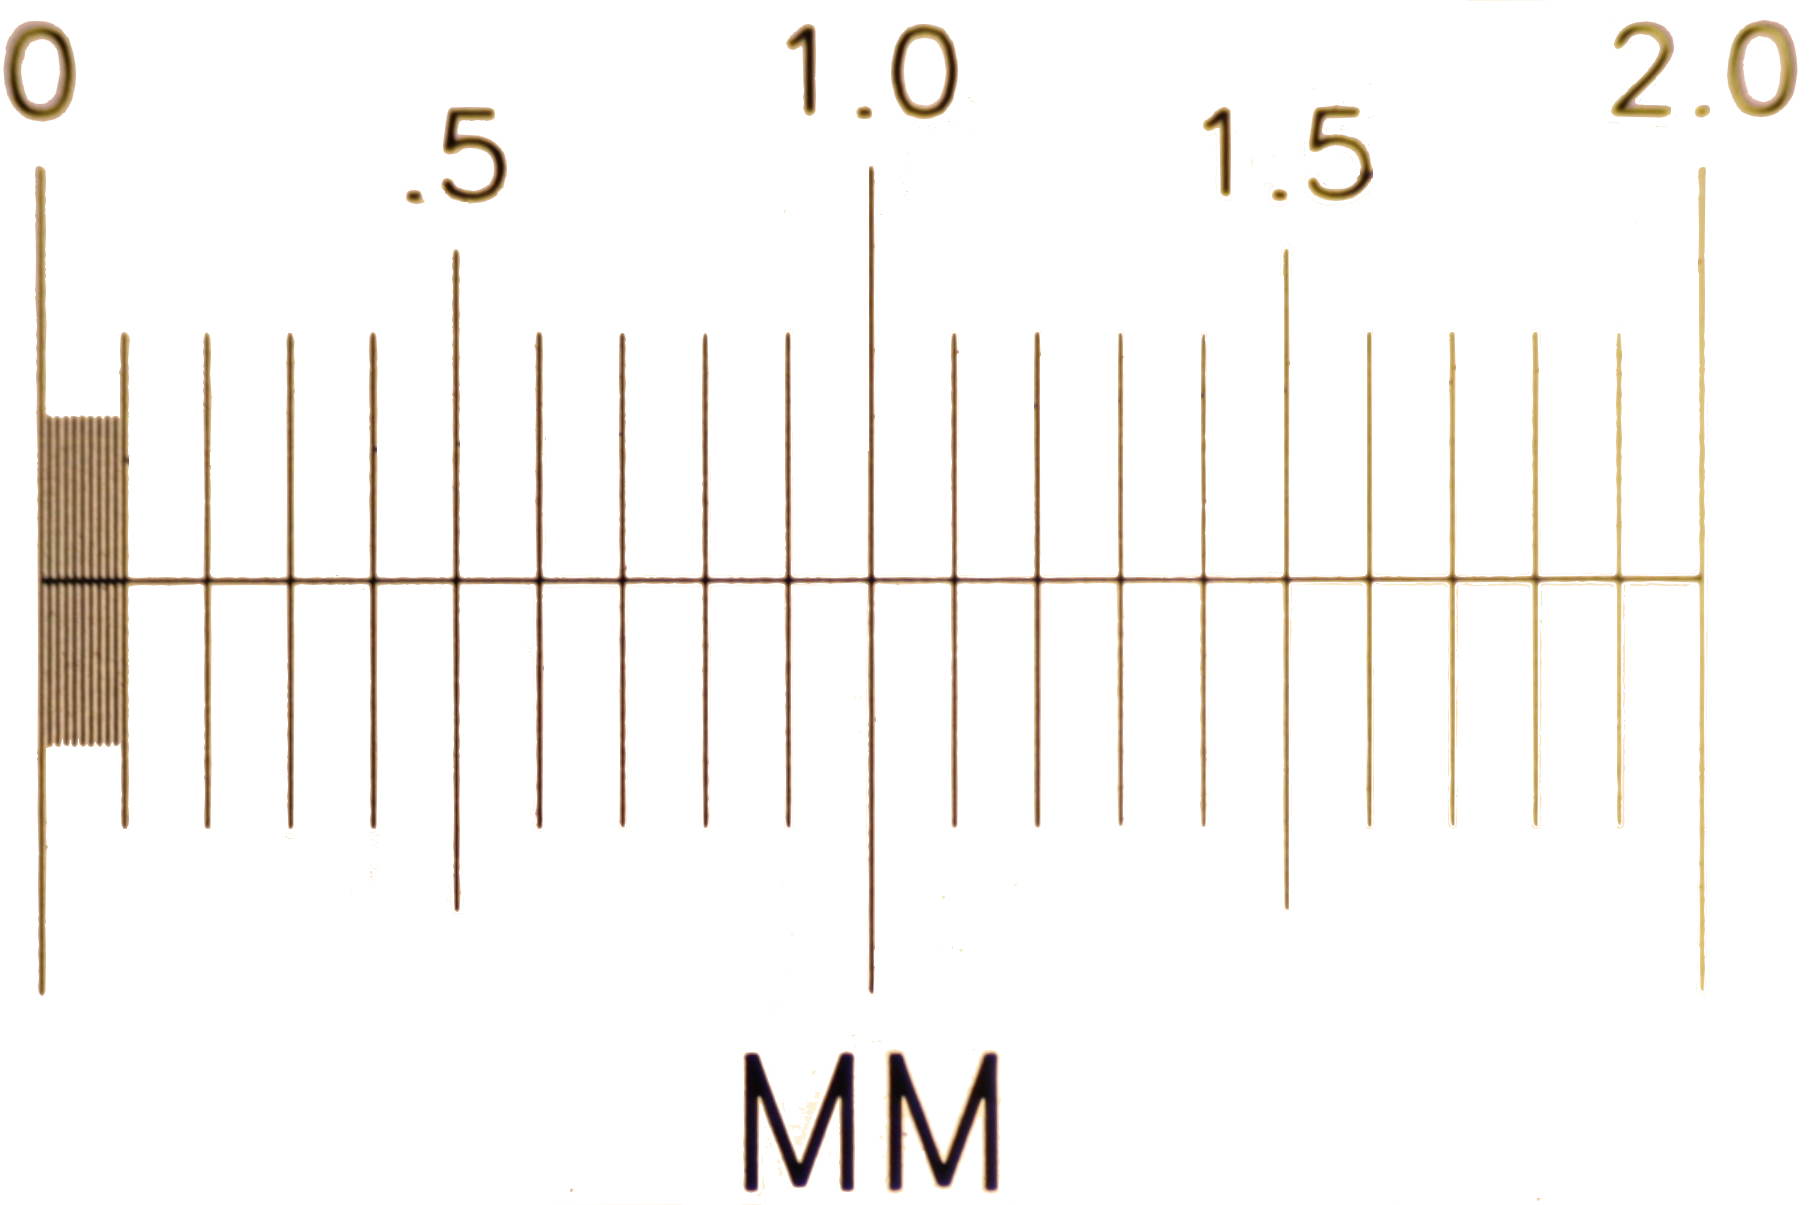 Slide micrometer using 4x objective